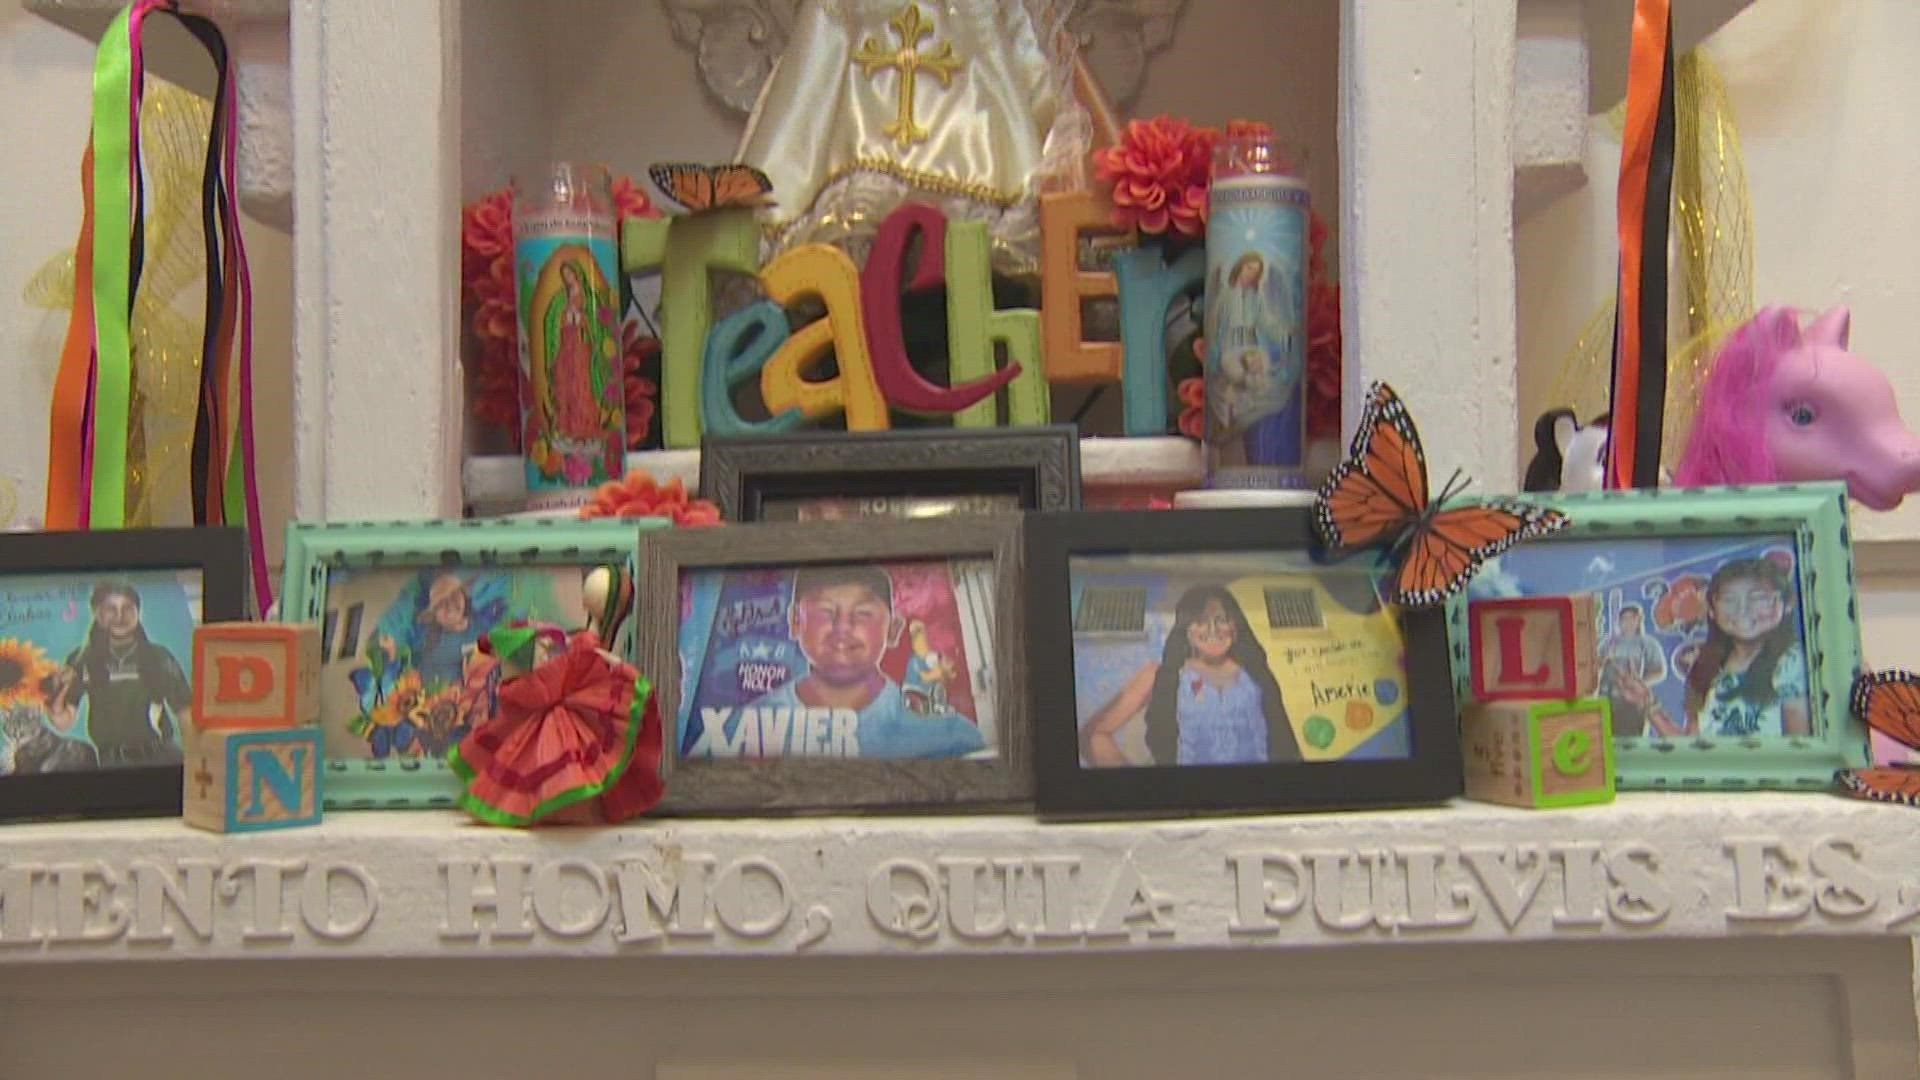 The Houston Latino-based arts and community nonprofit has an "ofrenda" dedicated to Uvalde victims.